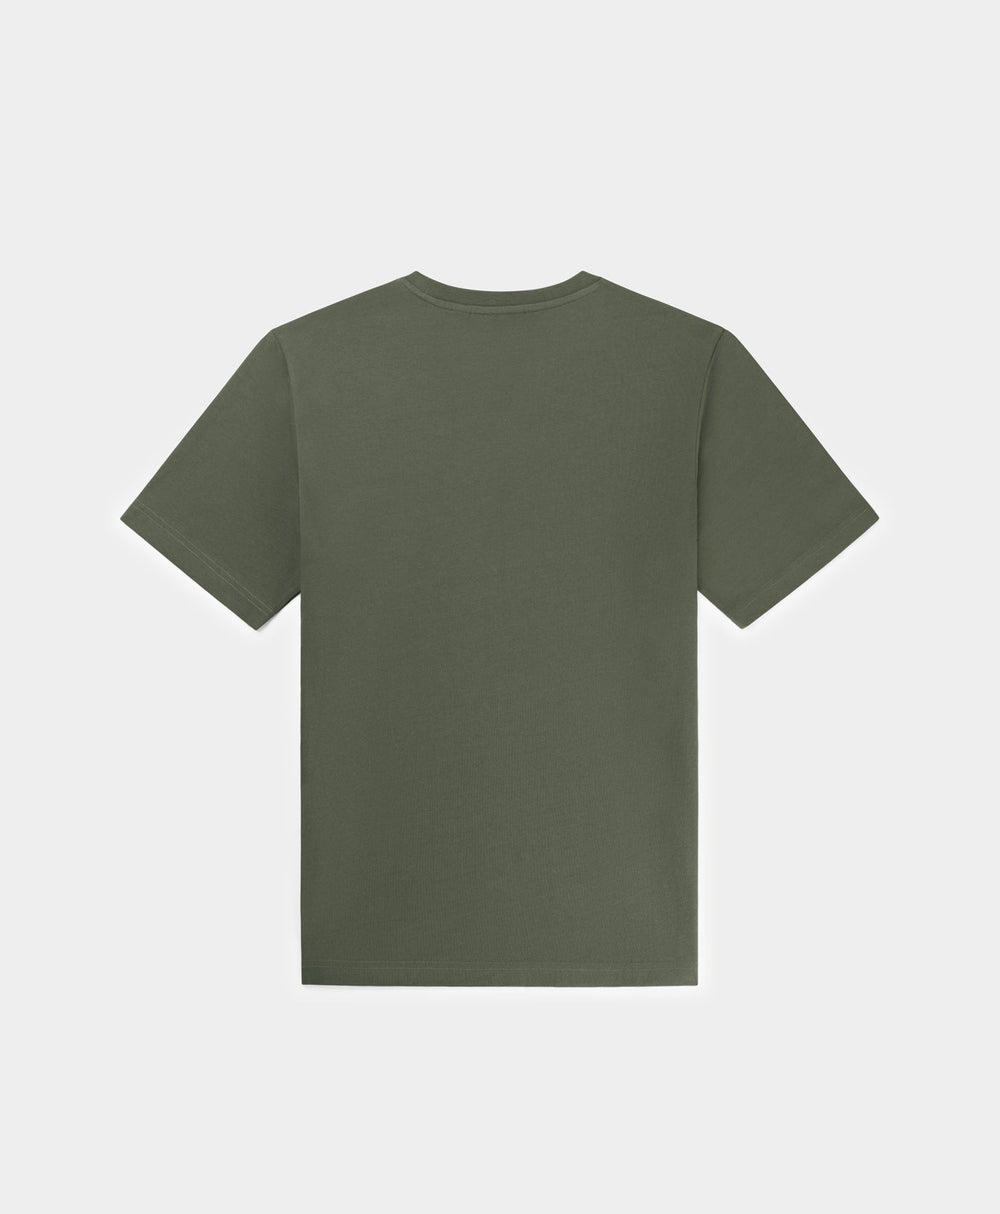 DP - Chimera Green Eli T-Shirt - Packshot - Rear